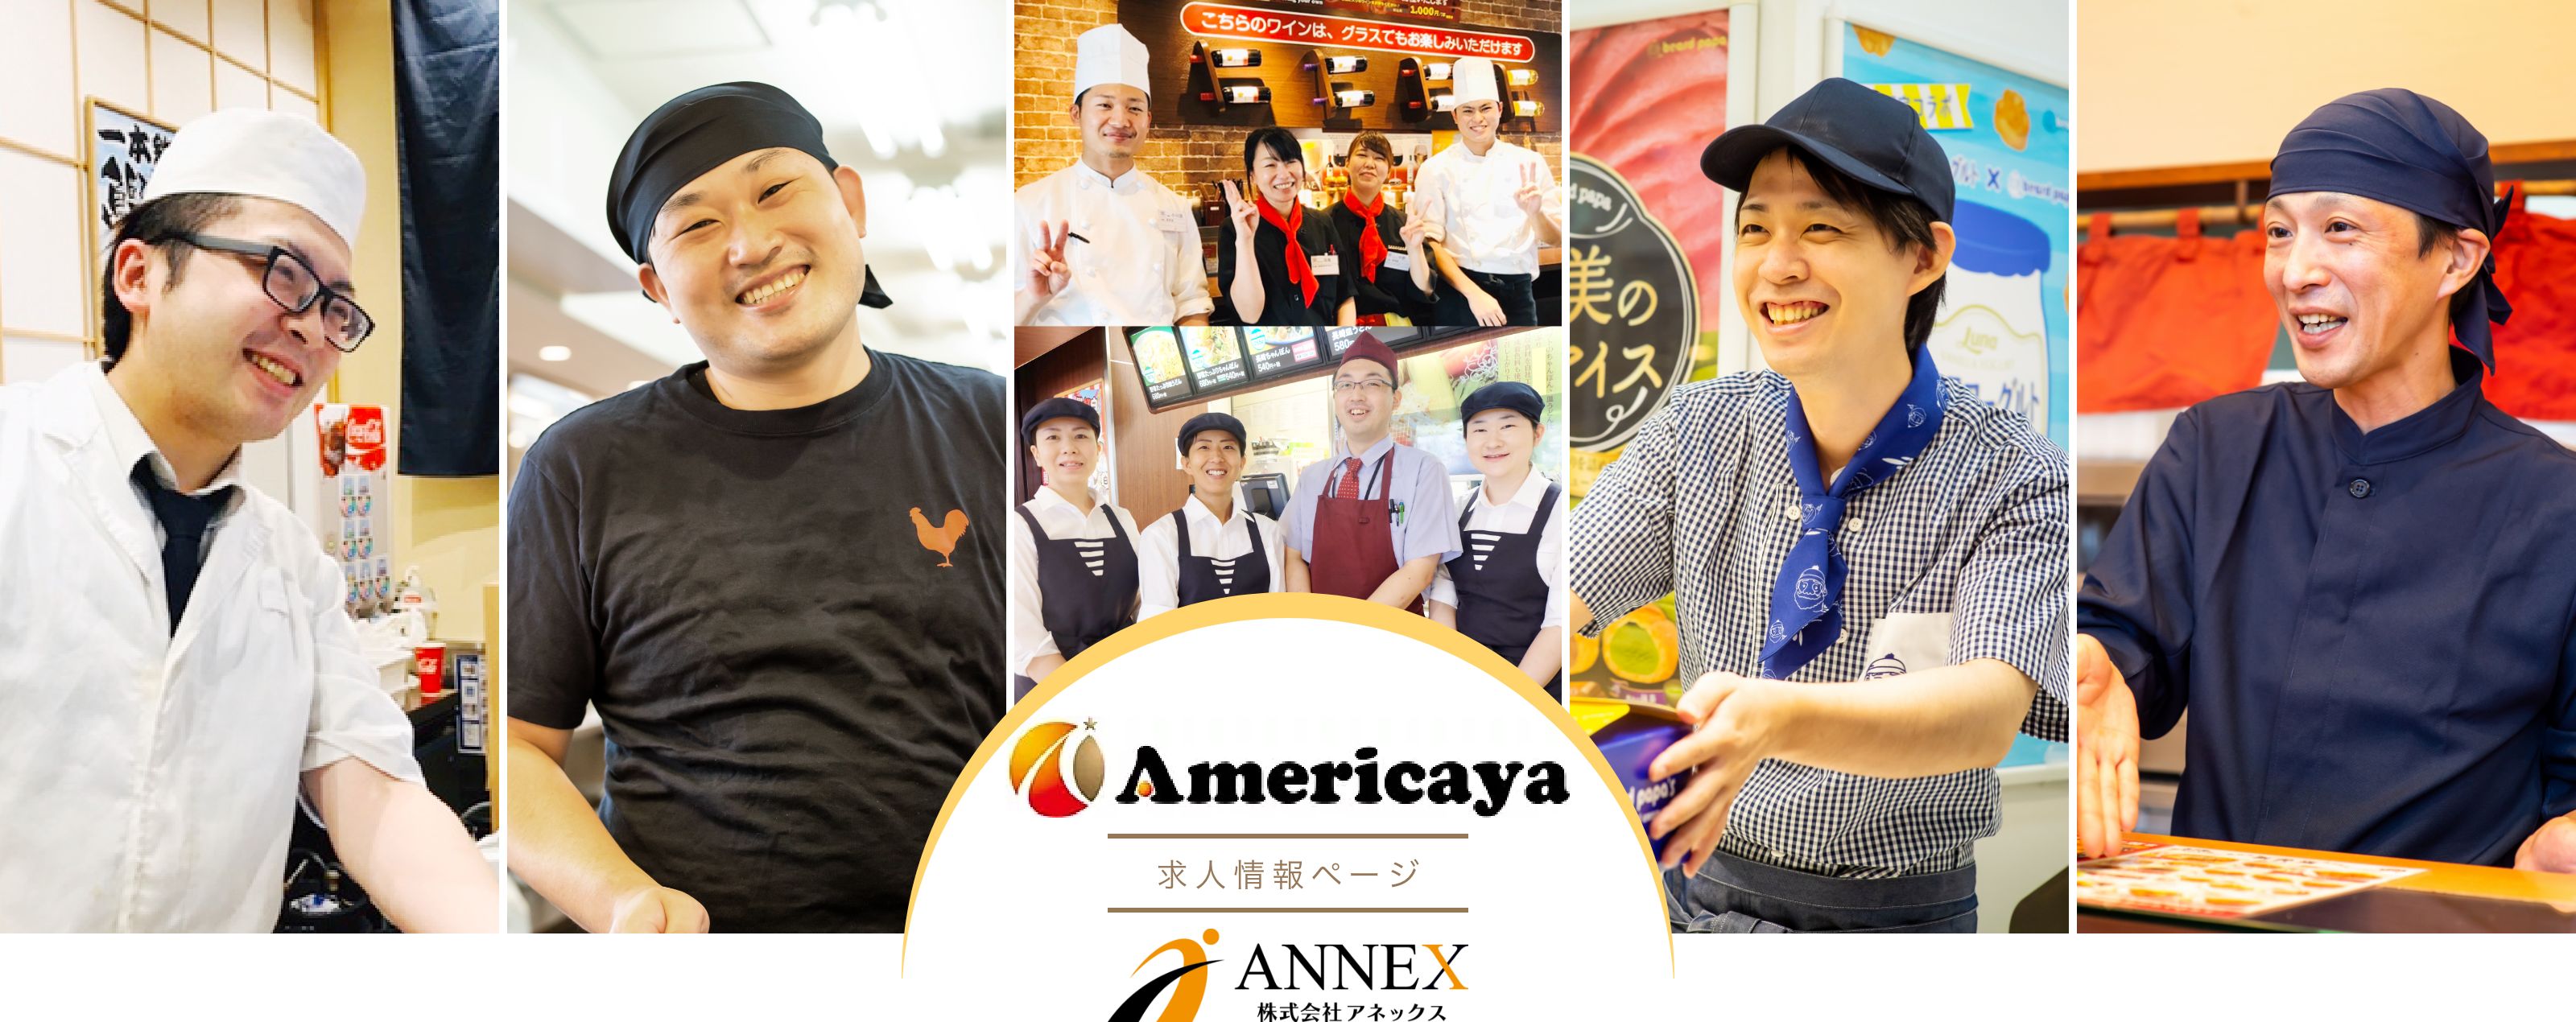 Americaya ANNEX 株式会社アネックス 求人情報ページ